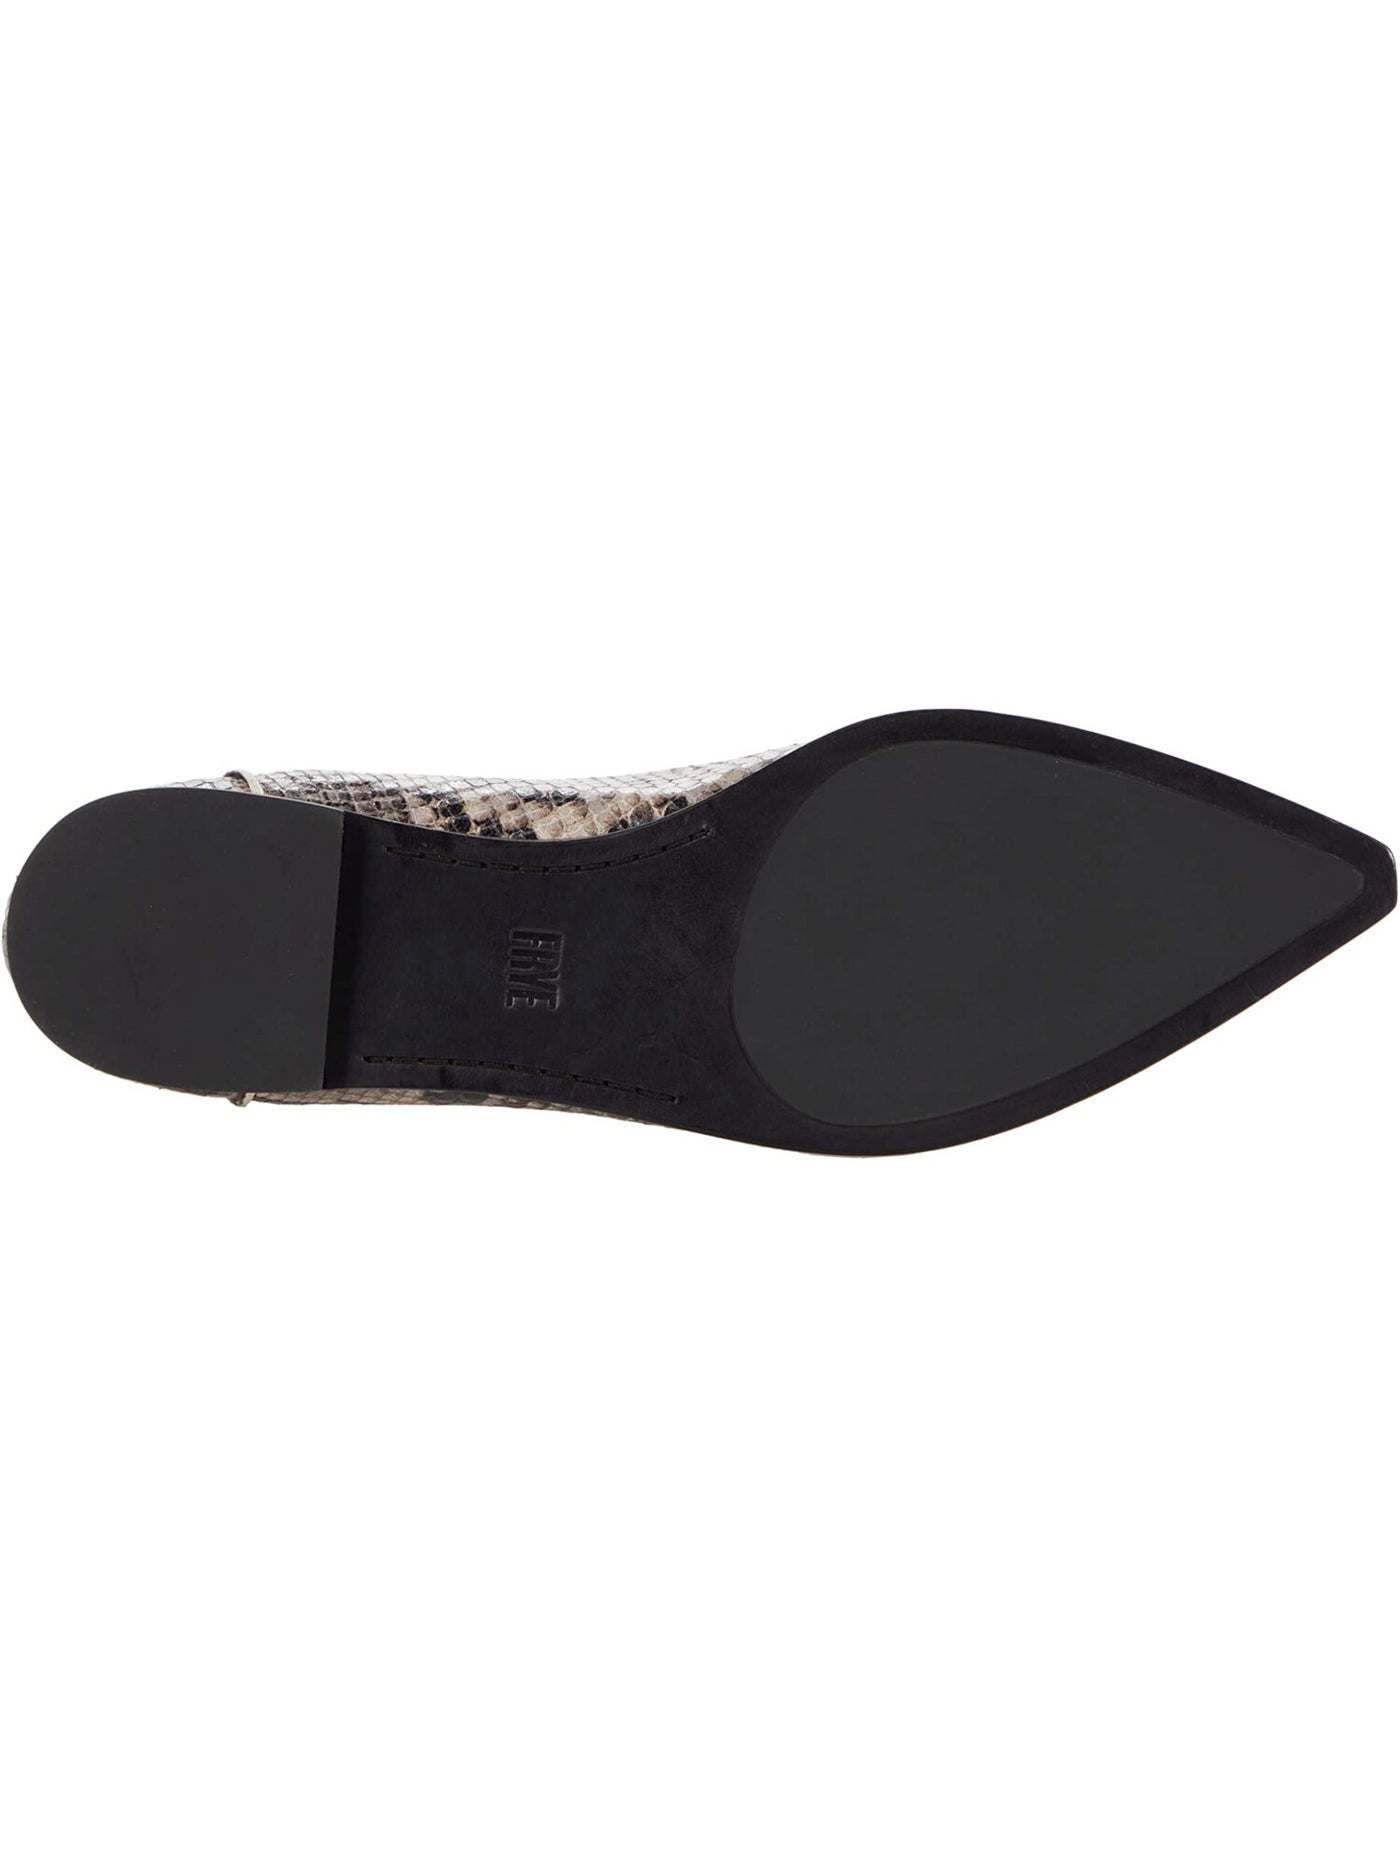 FRYE Womens Beige Snake Print Comfort Kenzie Pointed Toe Block Heel Slip On Leather Loafers Shoes M